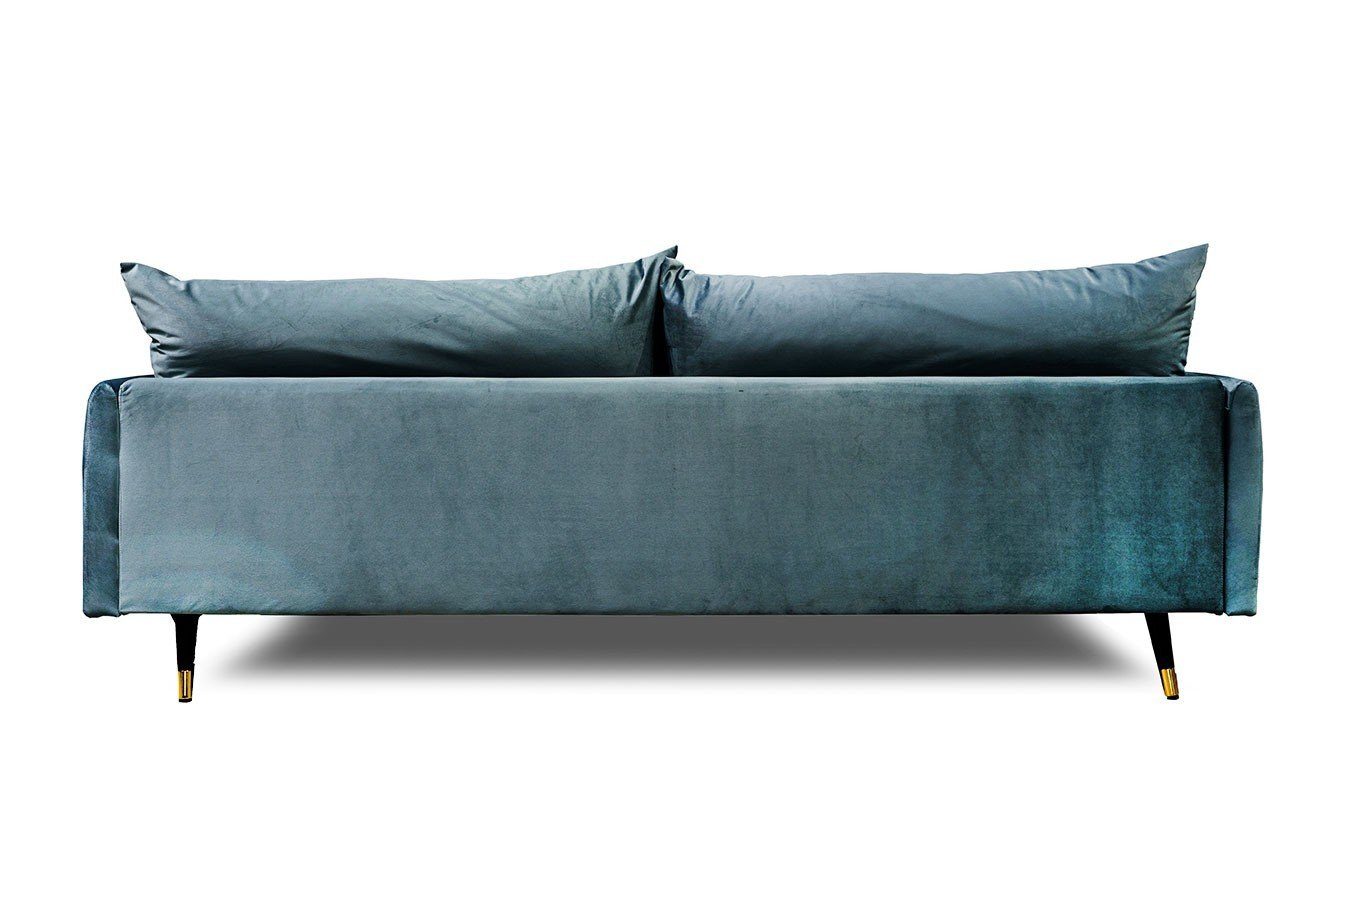 Big-Sofa Rosalie Samt 3 petrolblau Sitzer living daslagerhaus Sofa